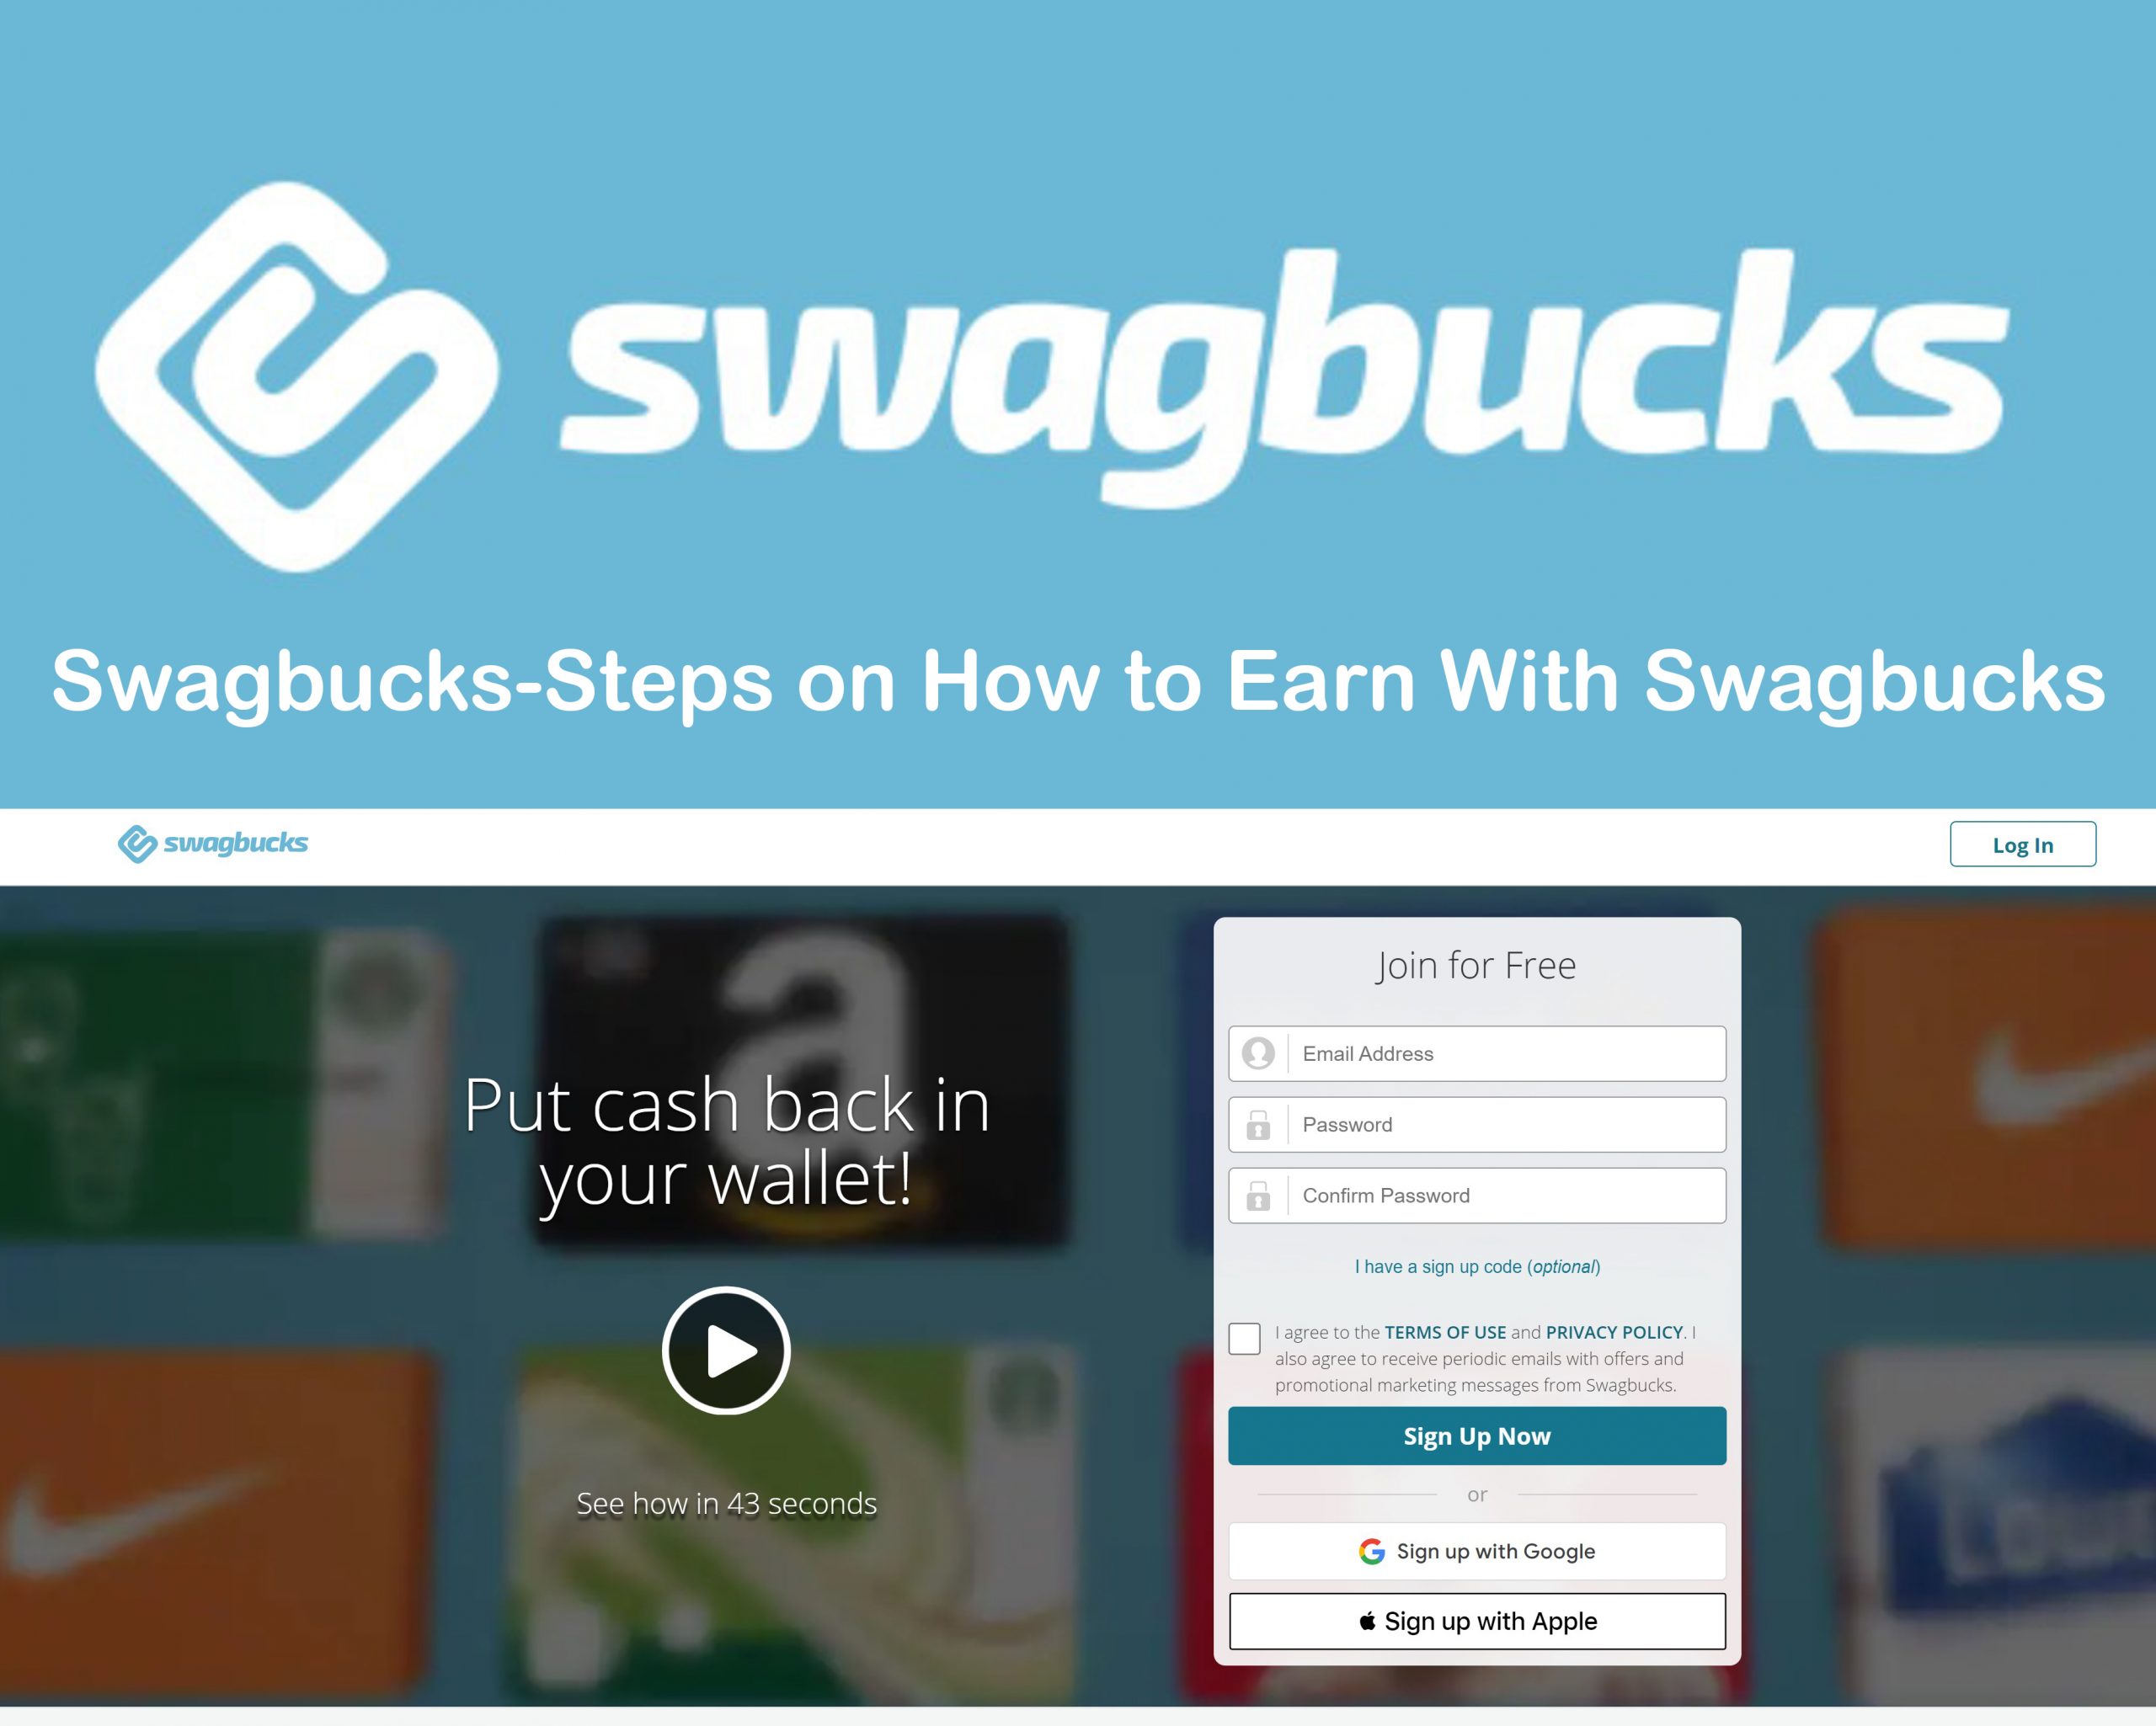 Swagbucks-Steps on How to Earn With Swagbucks